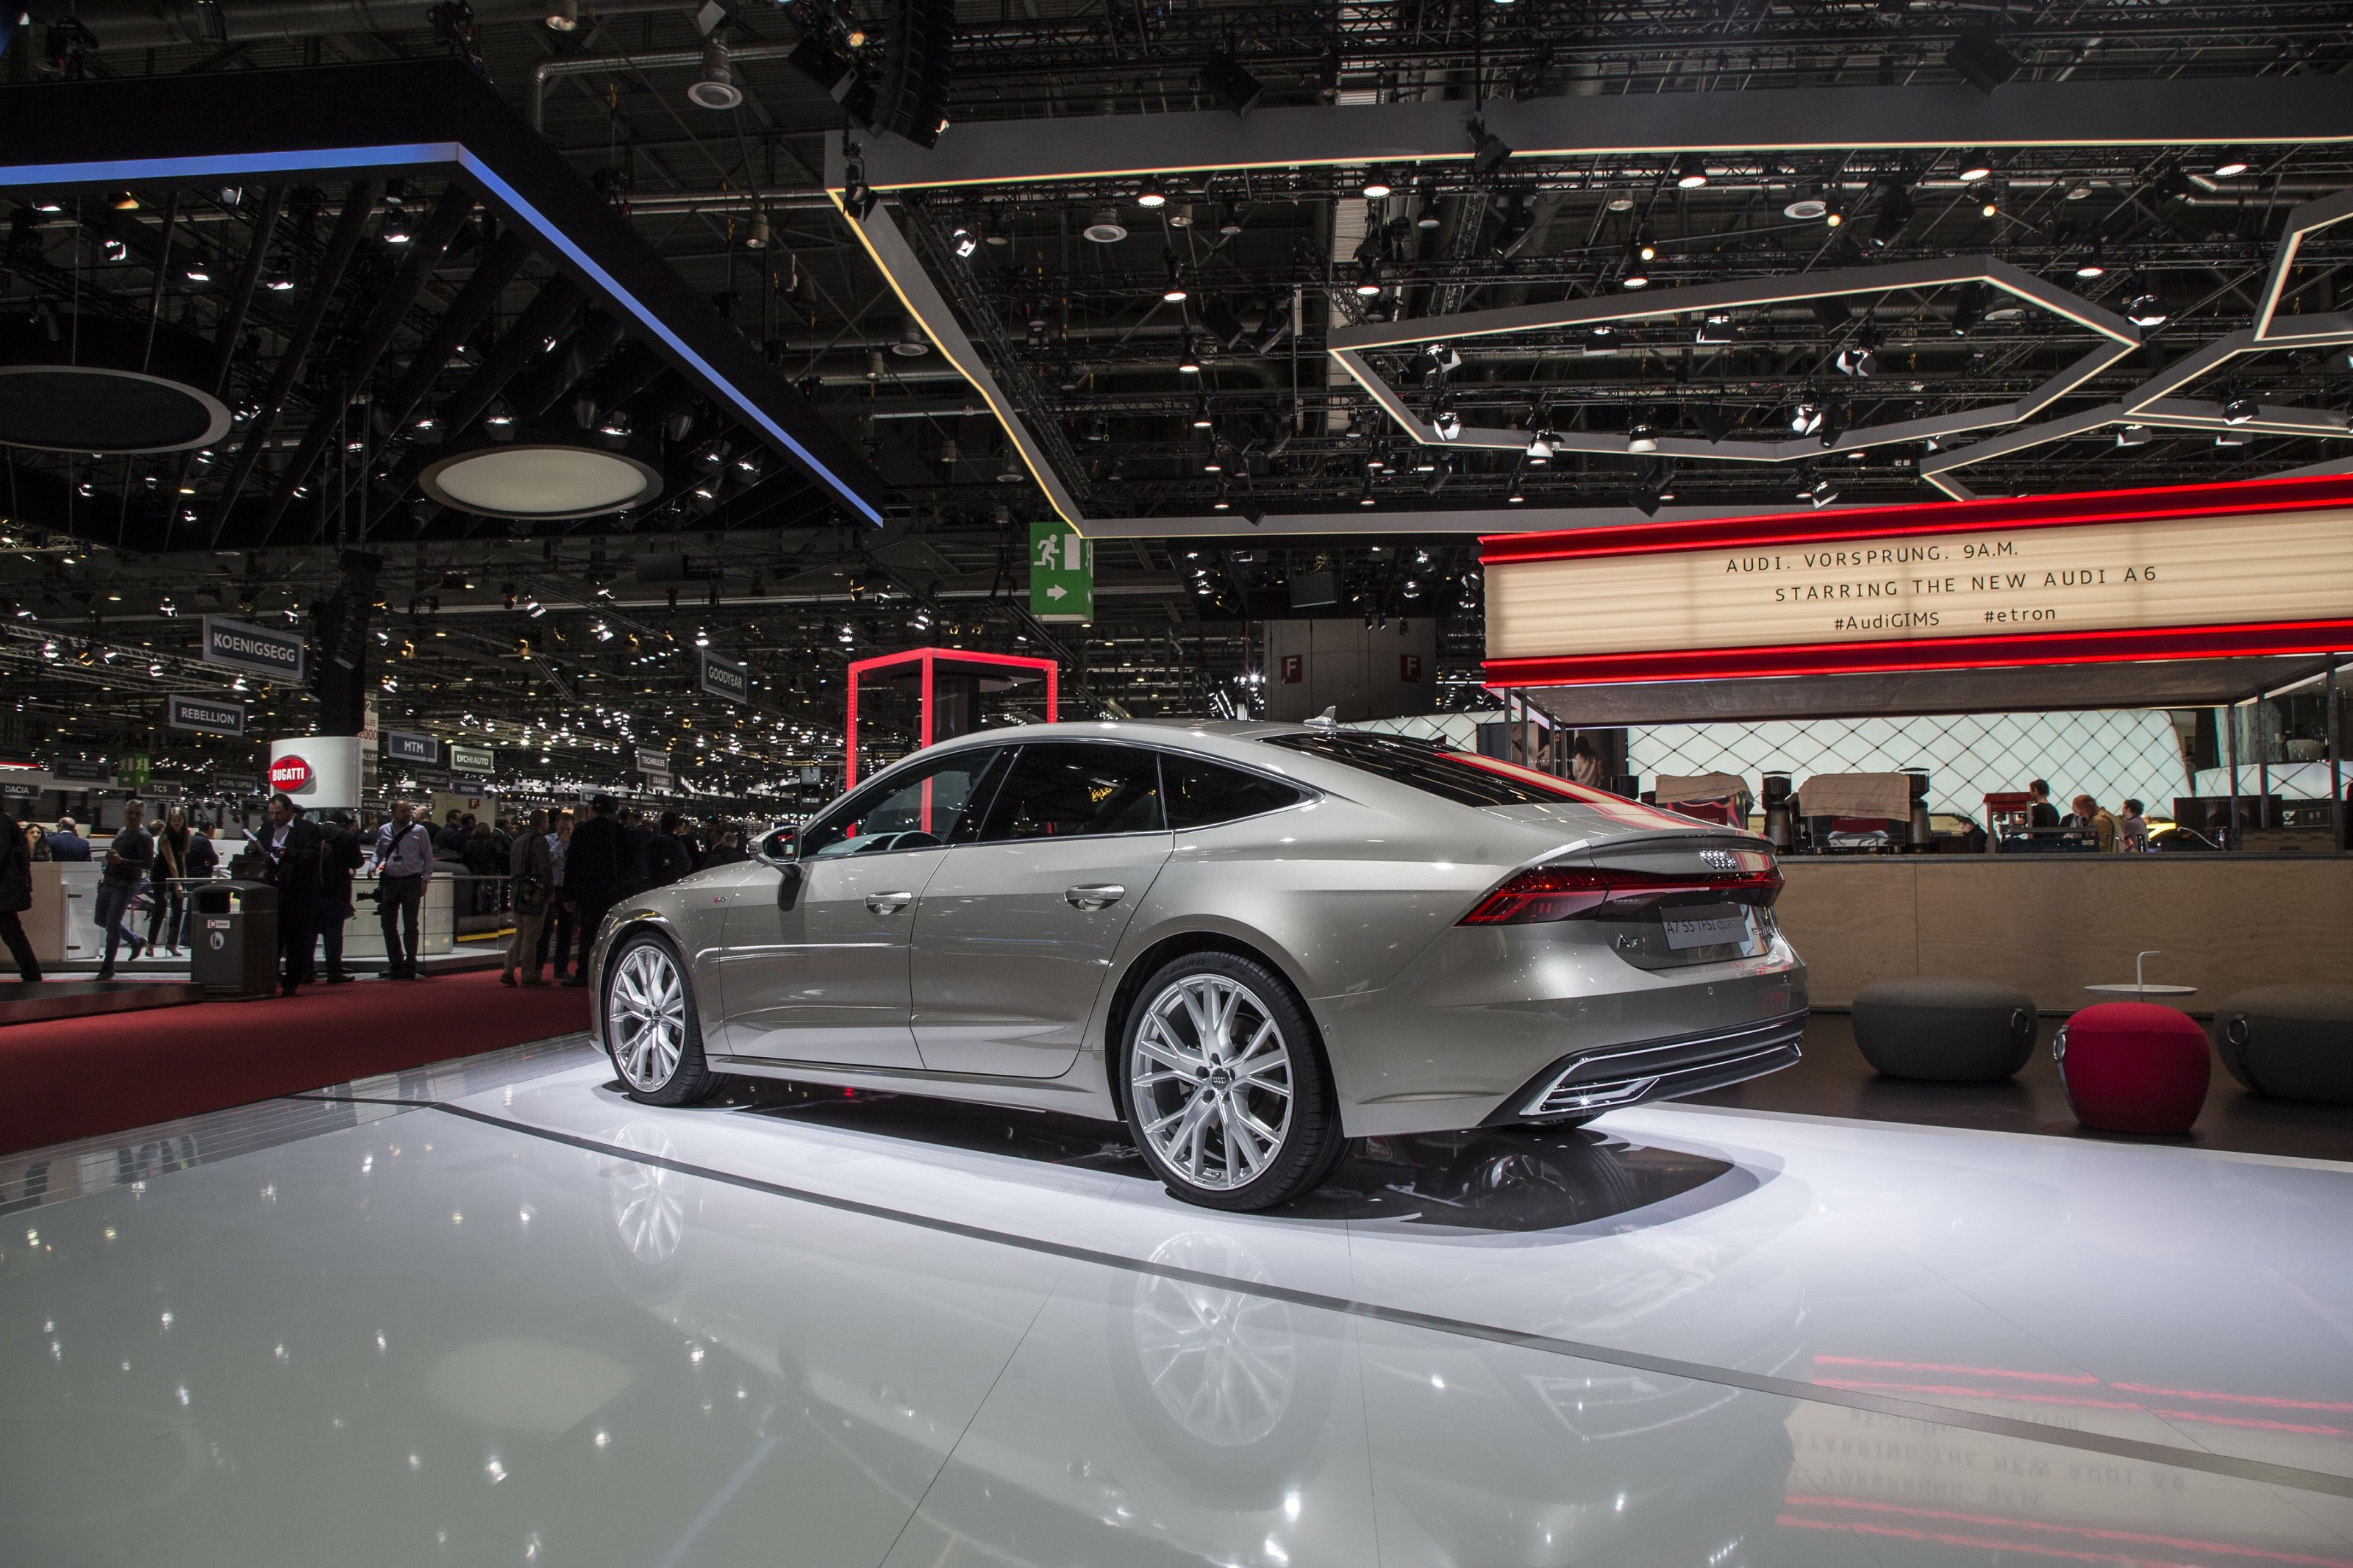 New Audi A6 presented at Geneva Motorshow